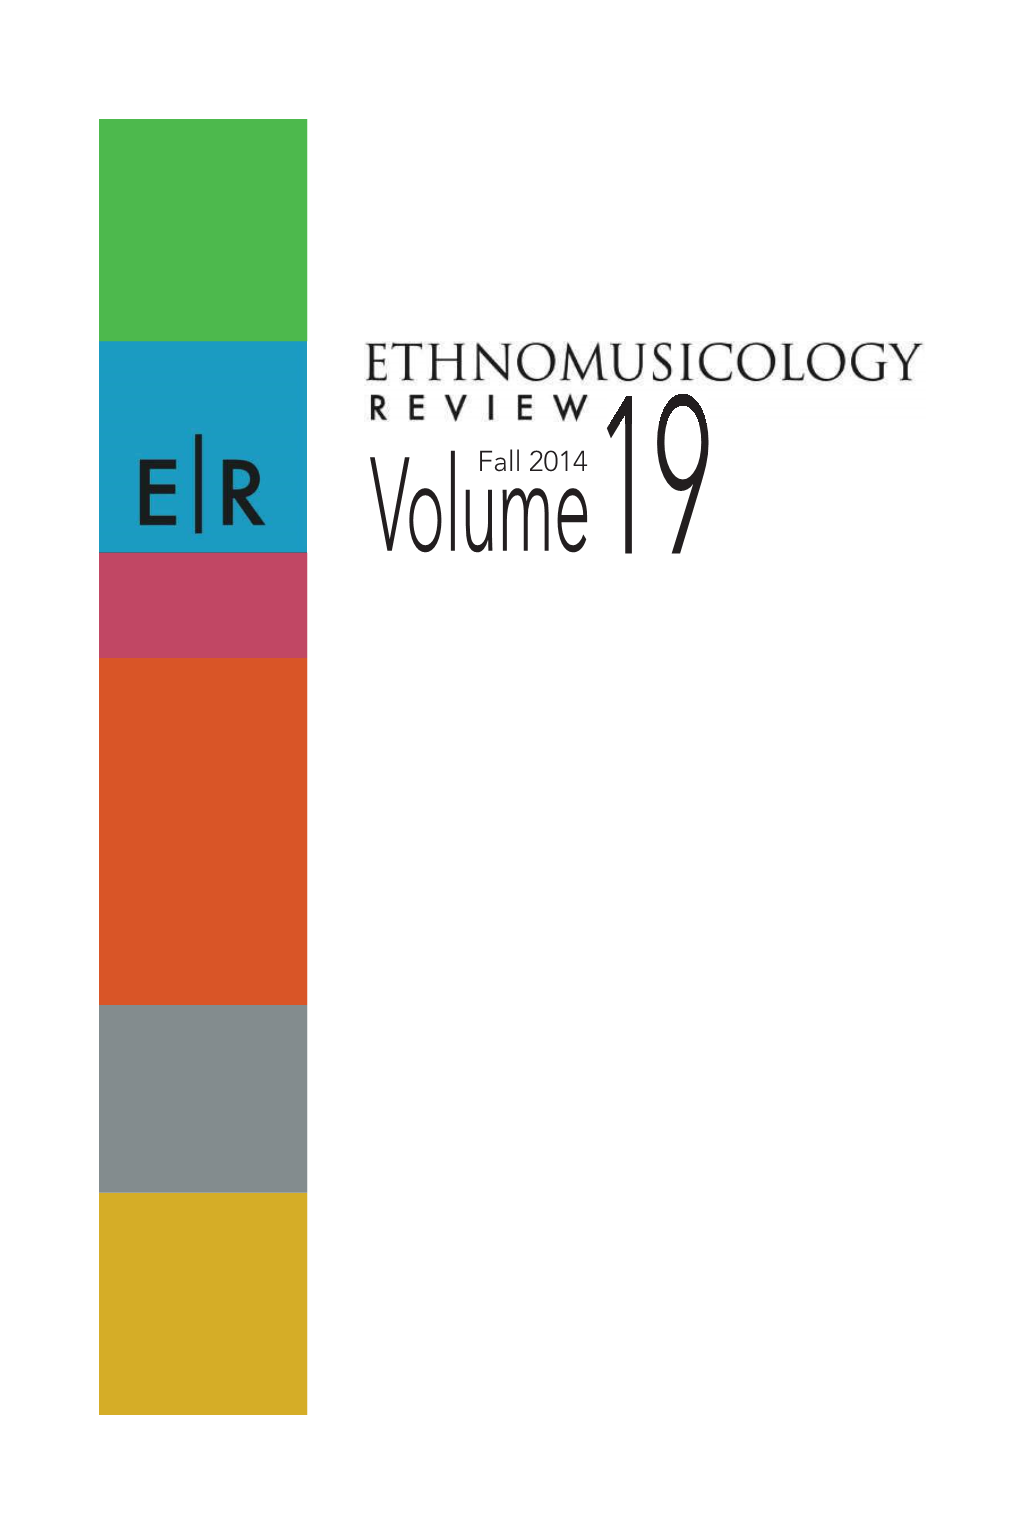 R Volume 19 (2014)